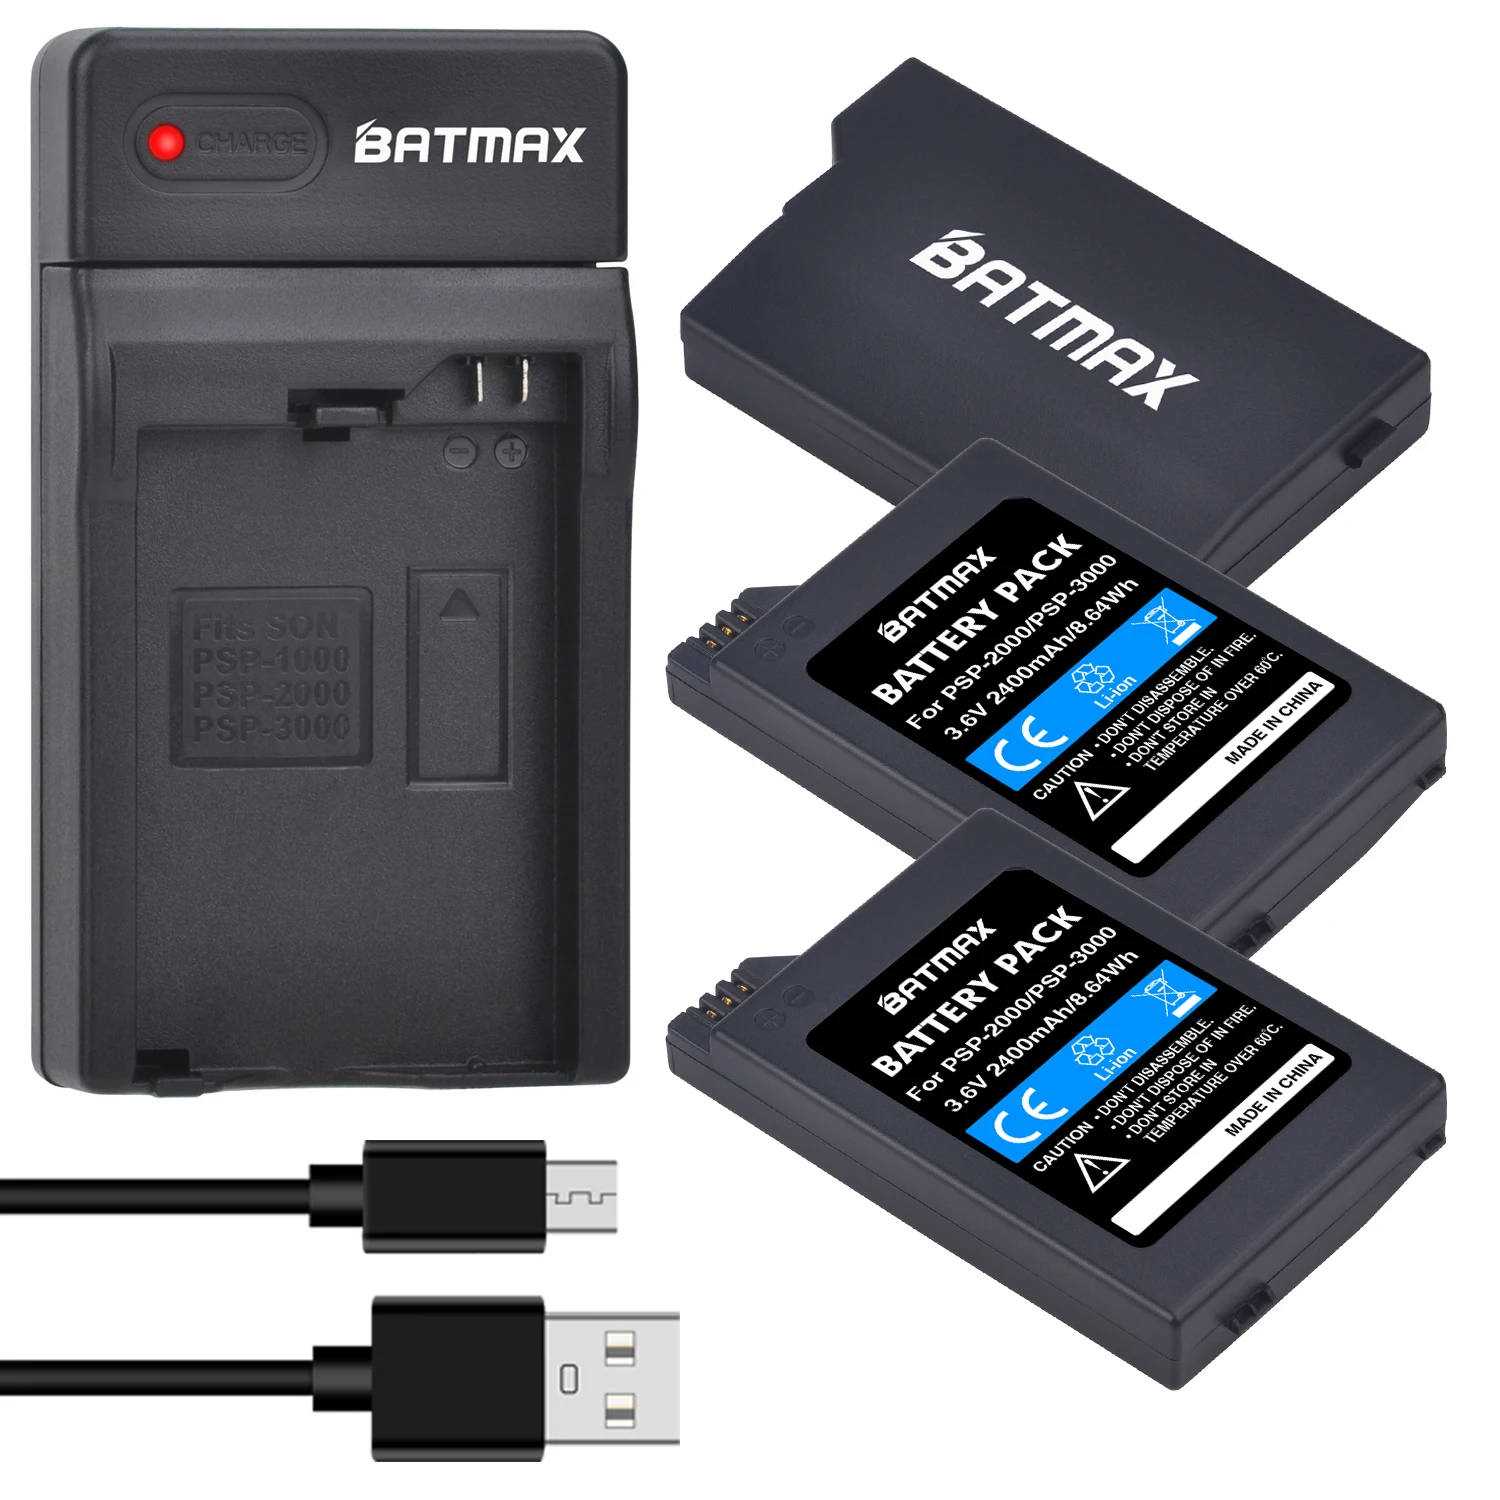 

Аккумулятор Batmax на 2400 мА · ч и зарядное устройство USB для Sony PSP2000 PSP3000 PSP 2000 3000